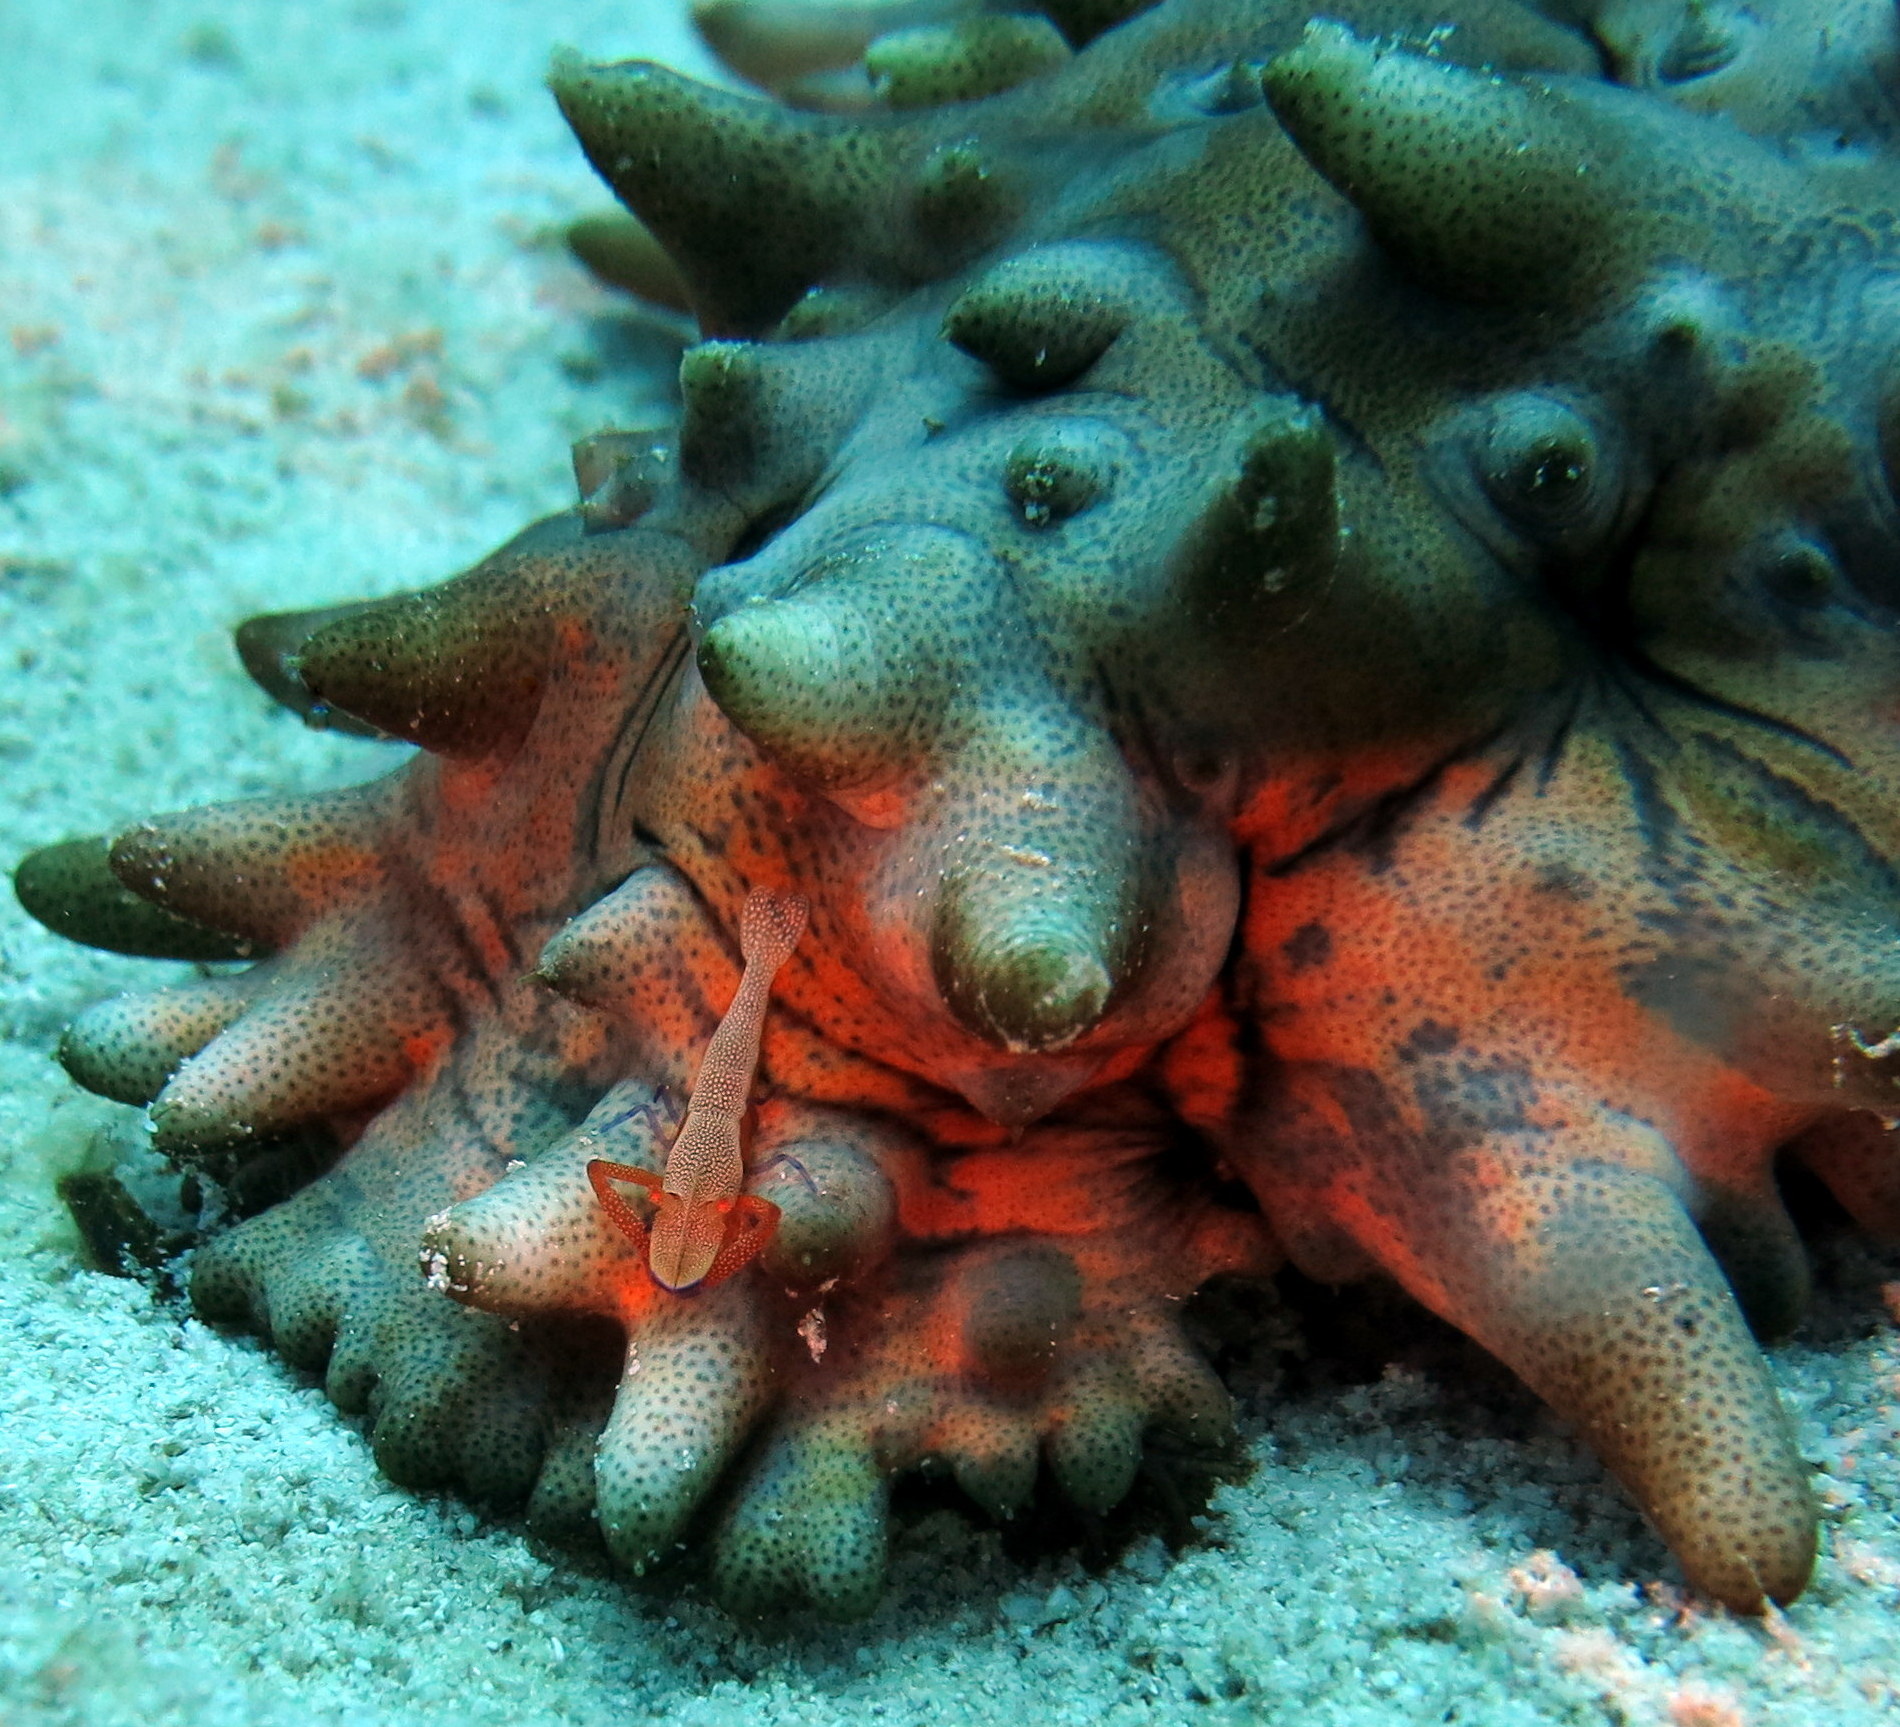 image of #LoveTheUnloved sea cucumber and shrimp photo contest winner